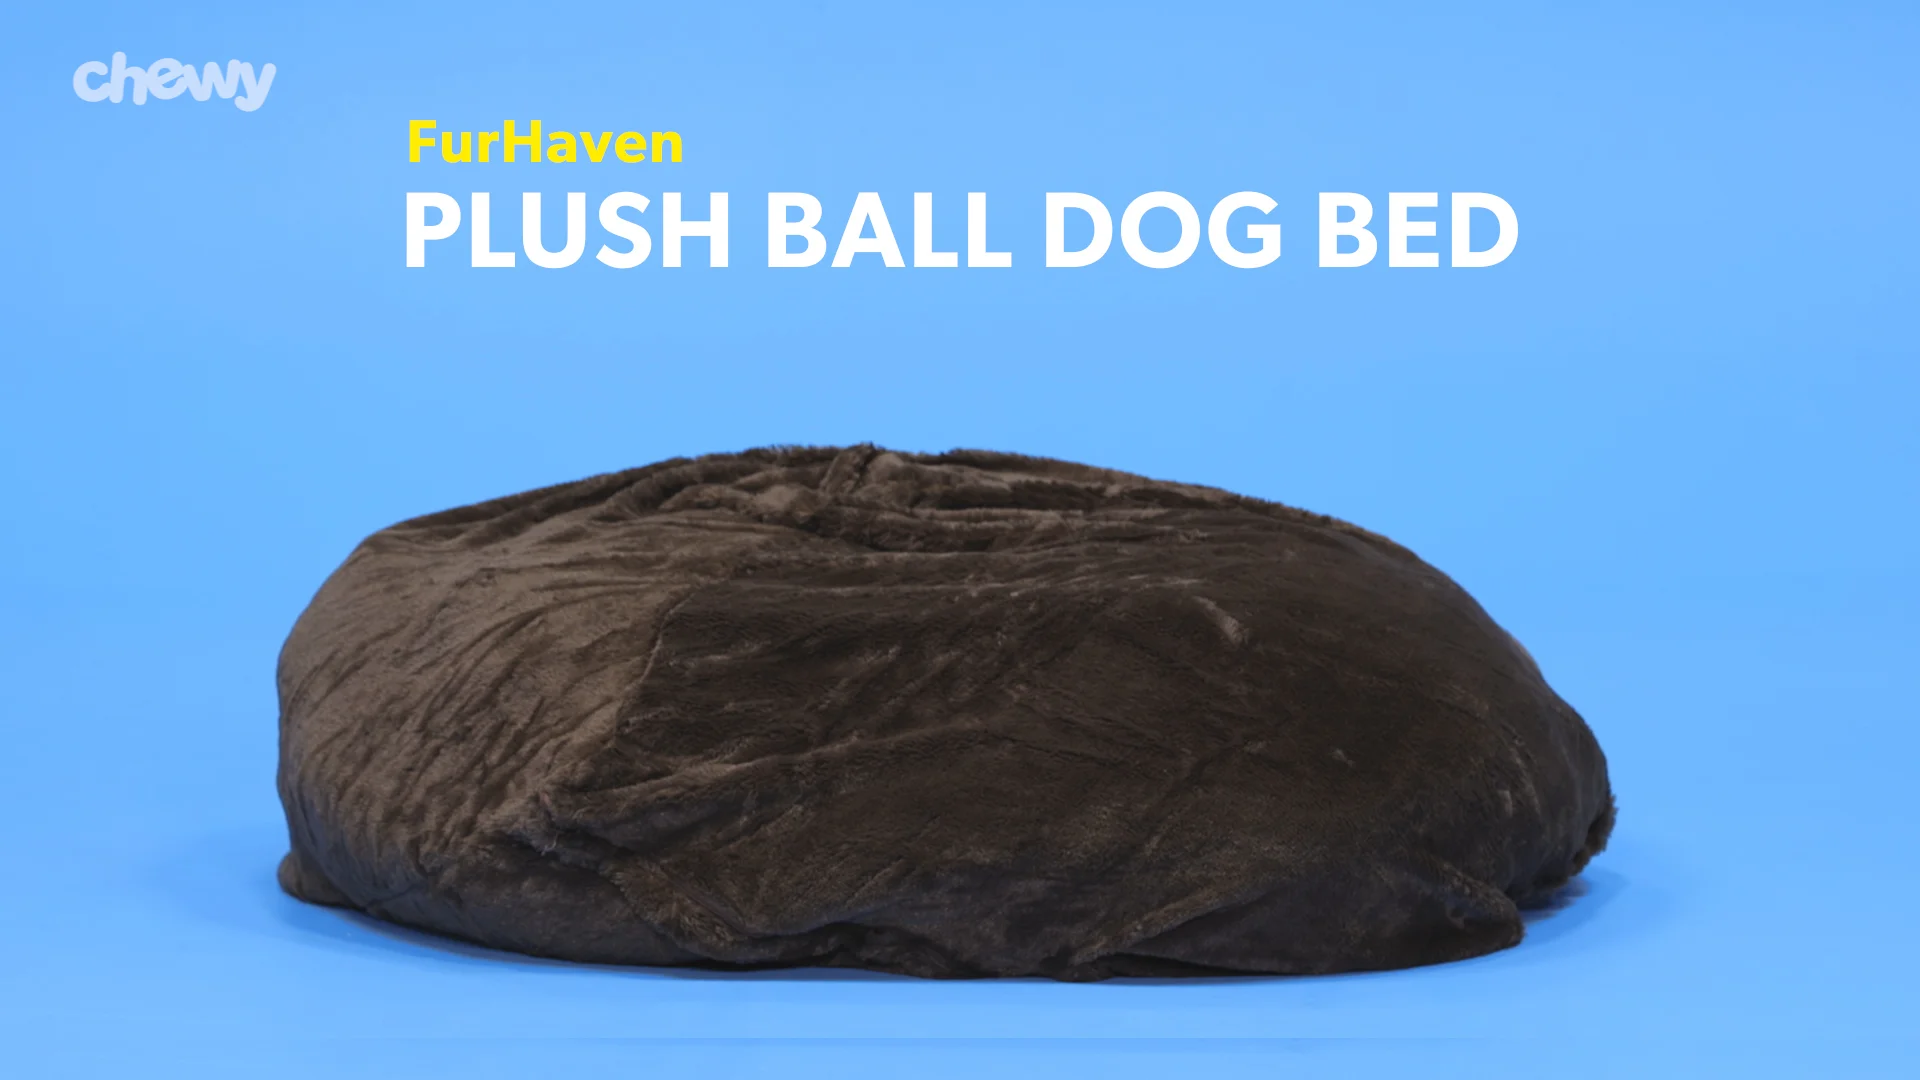 furhaven plush ball dog bed